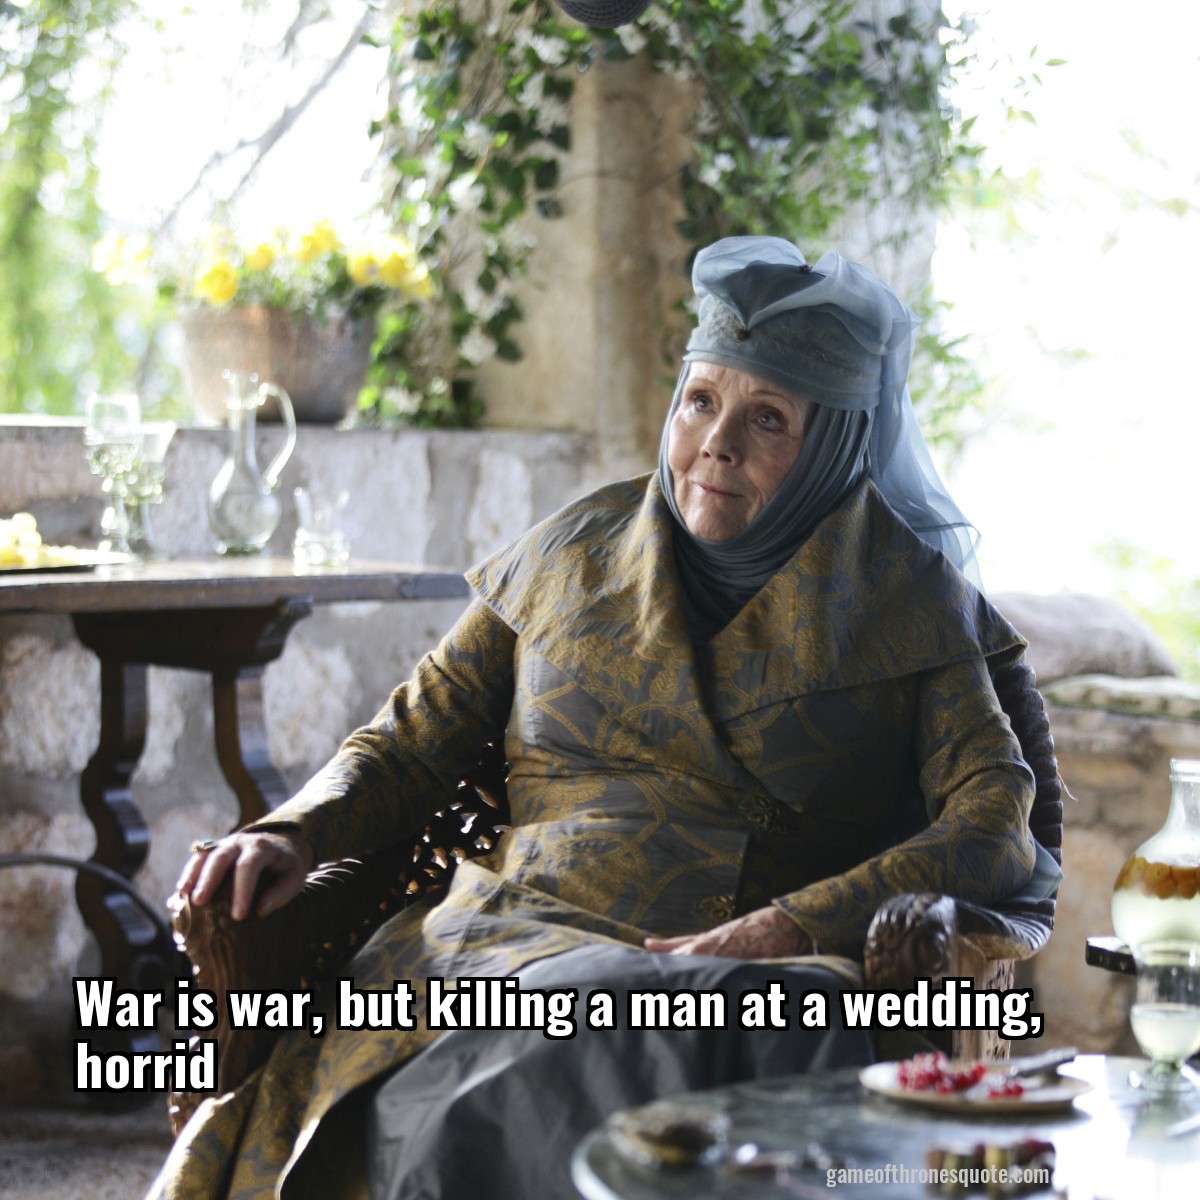 War is war, but killing a man at a wedding, horrid